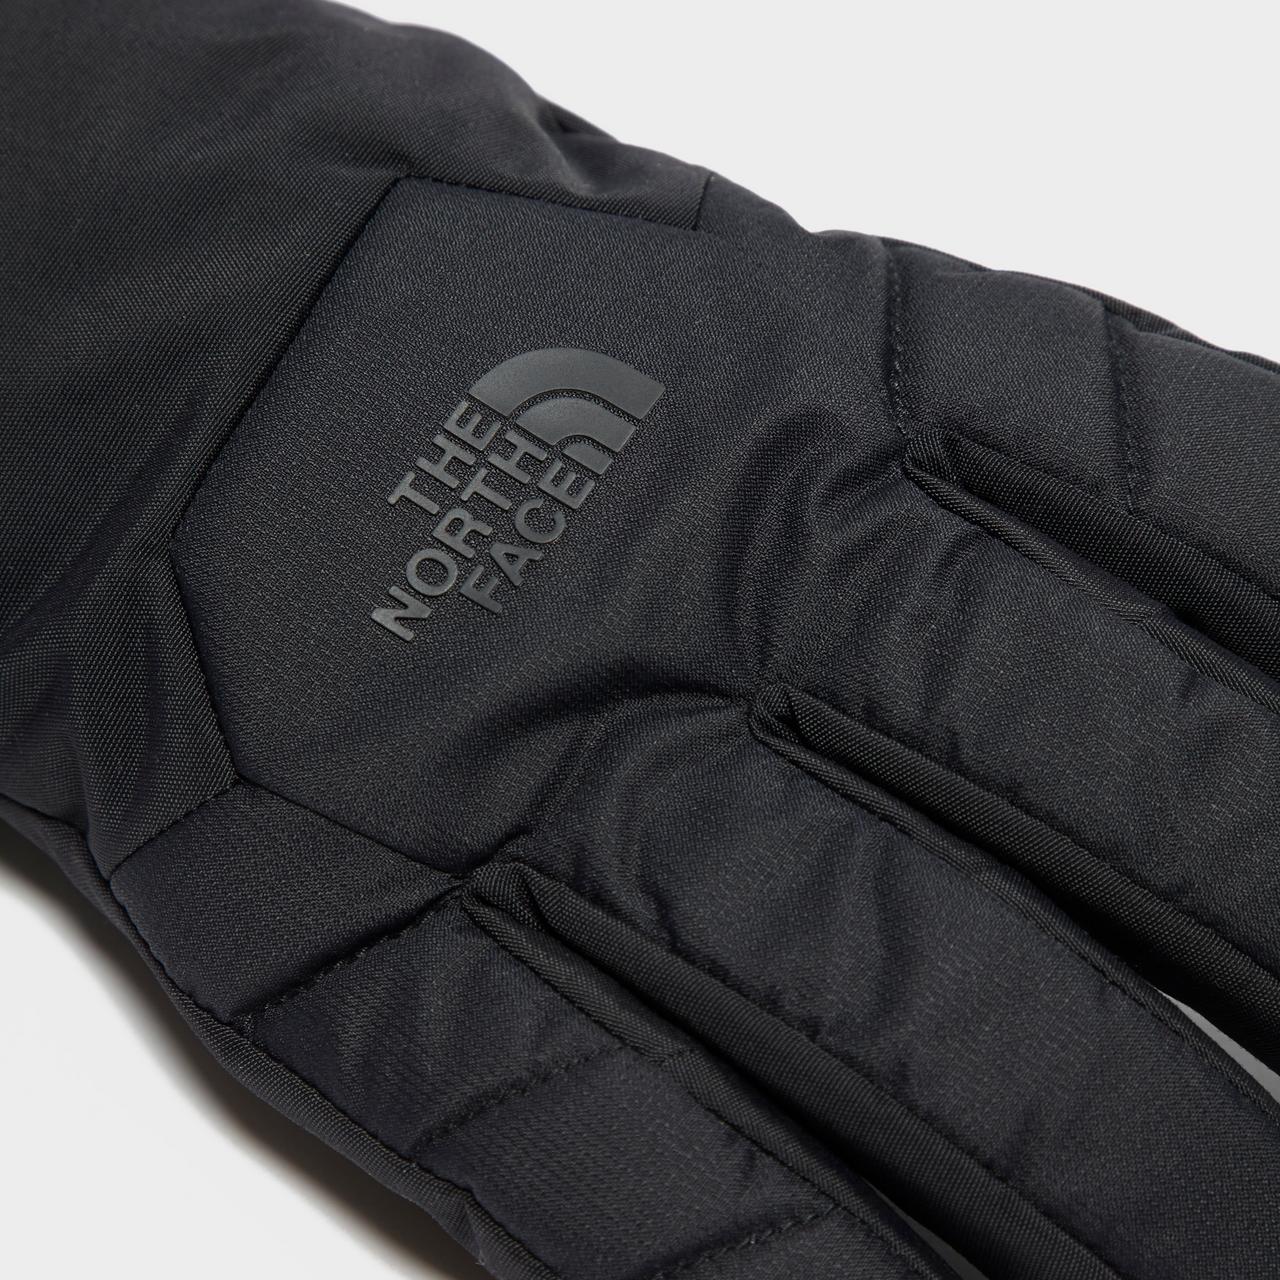 The North Face Men’s Revelstoke Etip Gloves NF0A34M1 The North Face ktmart 3